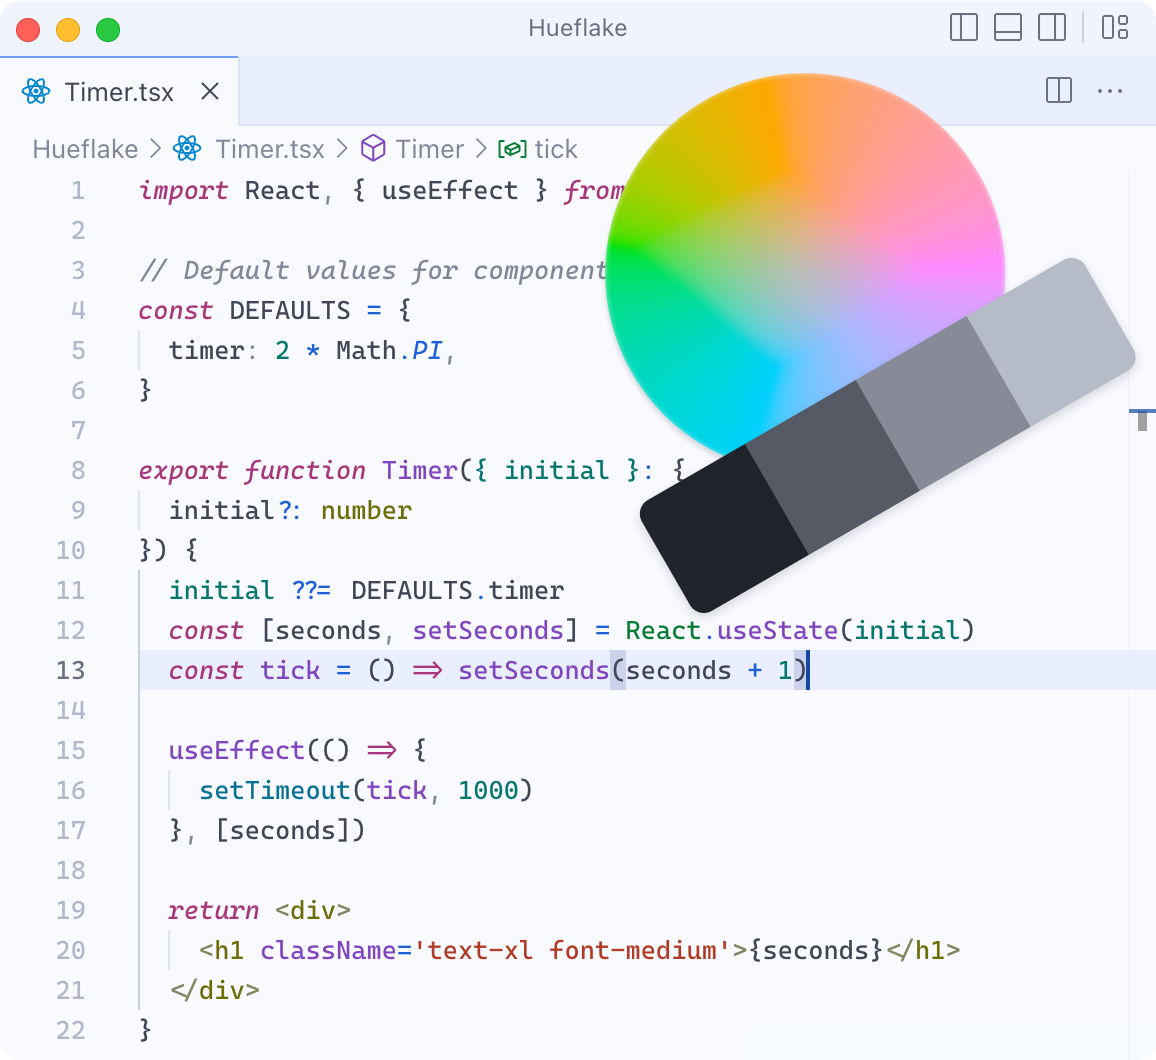 Visual Studio Code with default Hueflake light theme and color wheel and shades